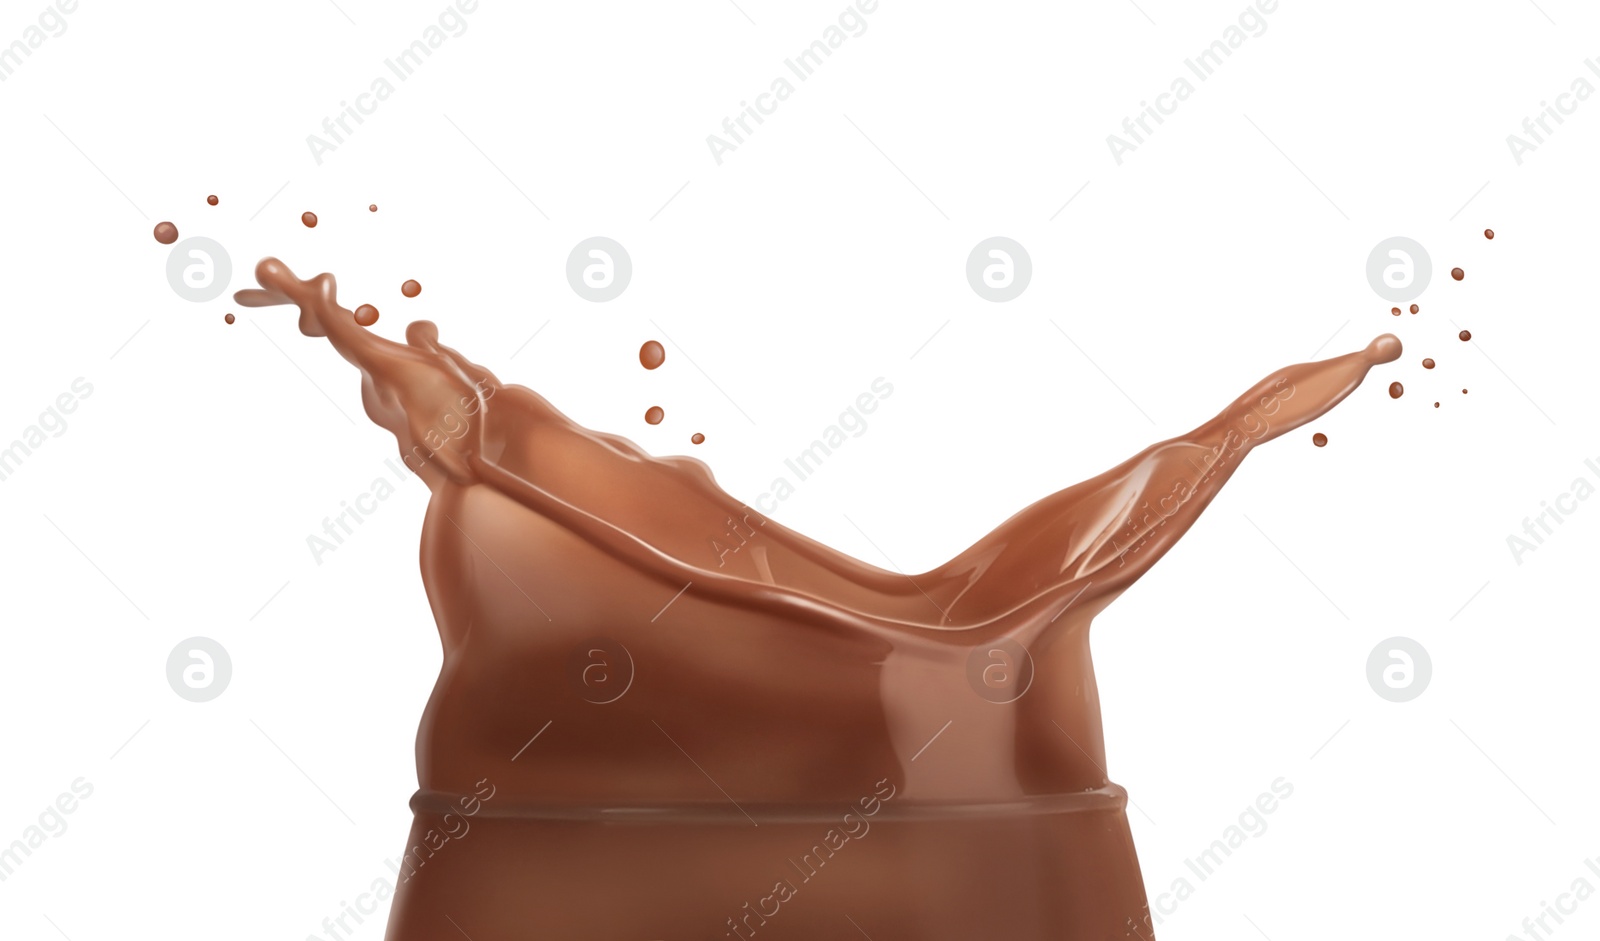 Image of Splash of delicious chocolate milk on white background